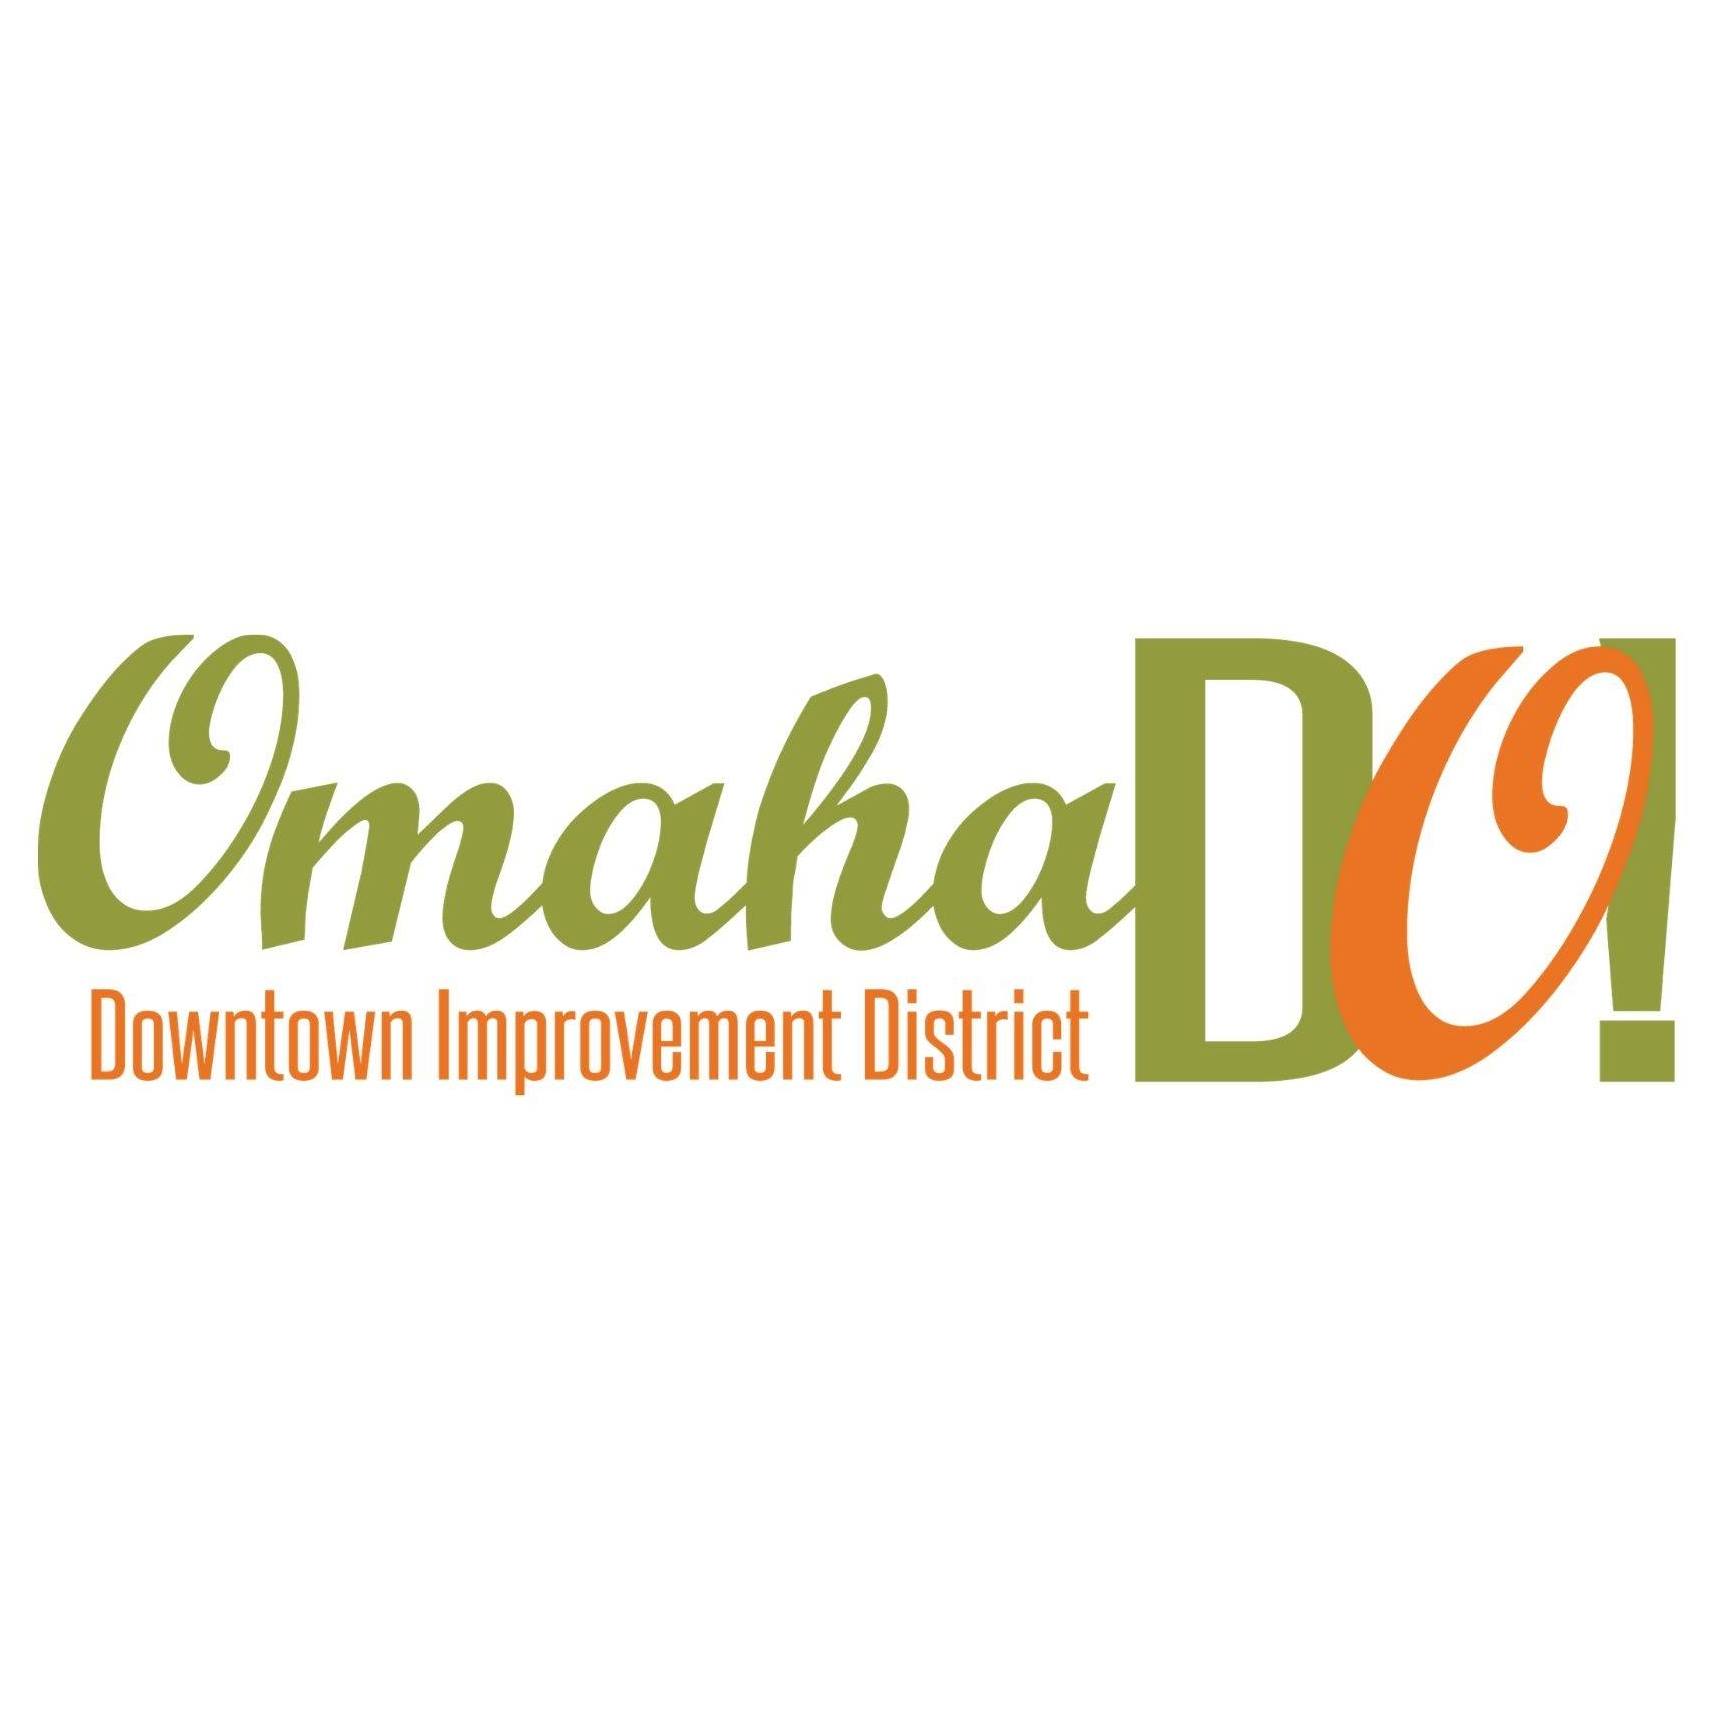 downtown improvement district